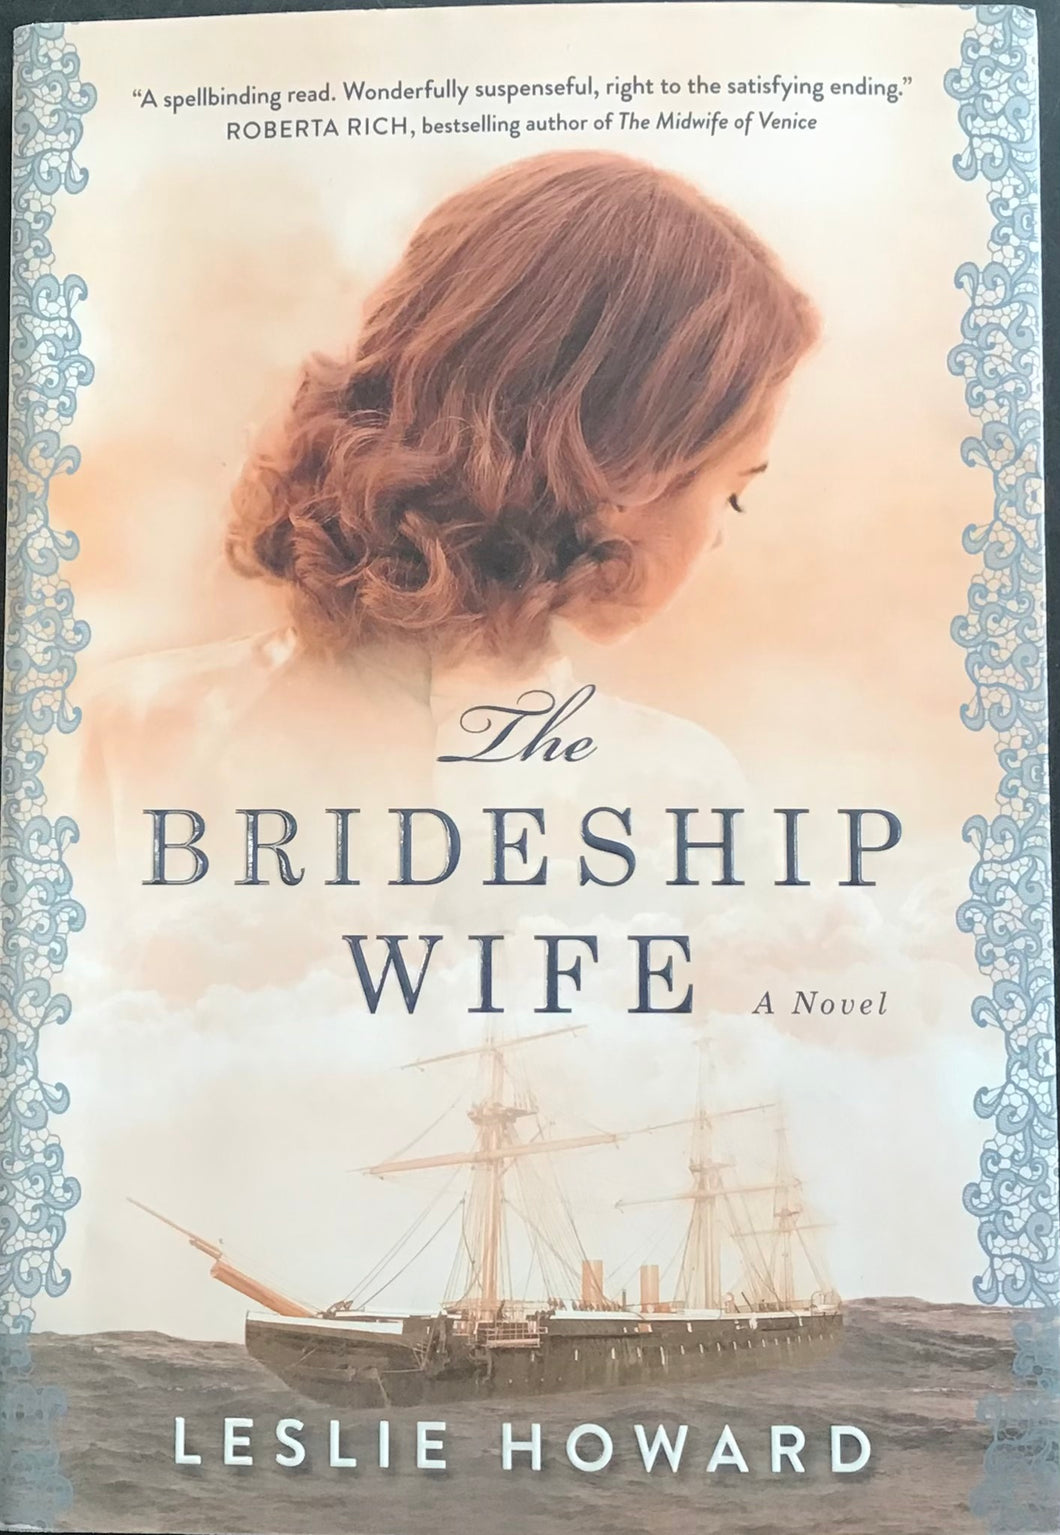 The Brideship Wife, Leslie Howard